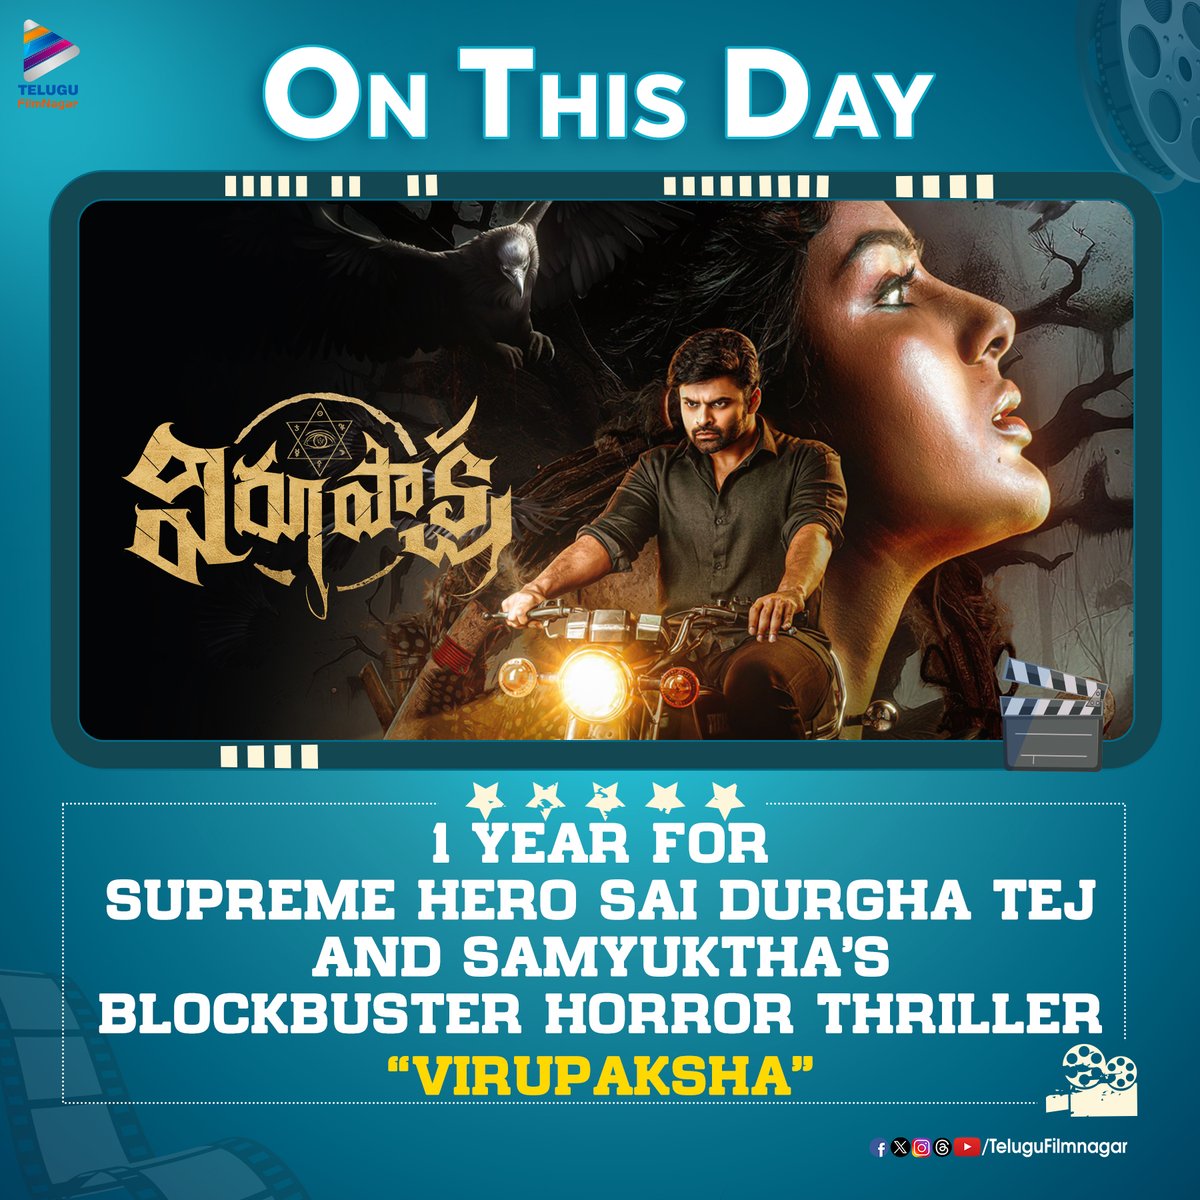 Today marks 1️⃣ year for Supreme Hero #SaiDurghaTej and #Samyuktha's blockbuster horror thriller Virupaksha!! 😨💥

#1YearForVirupaksha 
@IamSaiDharamTej @iamsamyuktha_ @karthikdandu86 @AJANEESHB @SVCCofficial #OnThisDay #TeluguFilmNagar